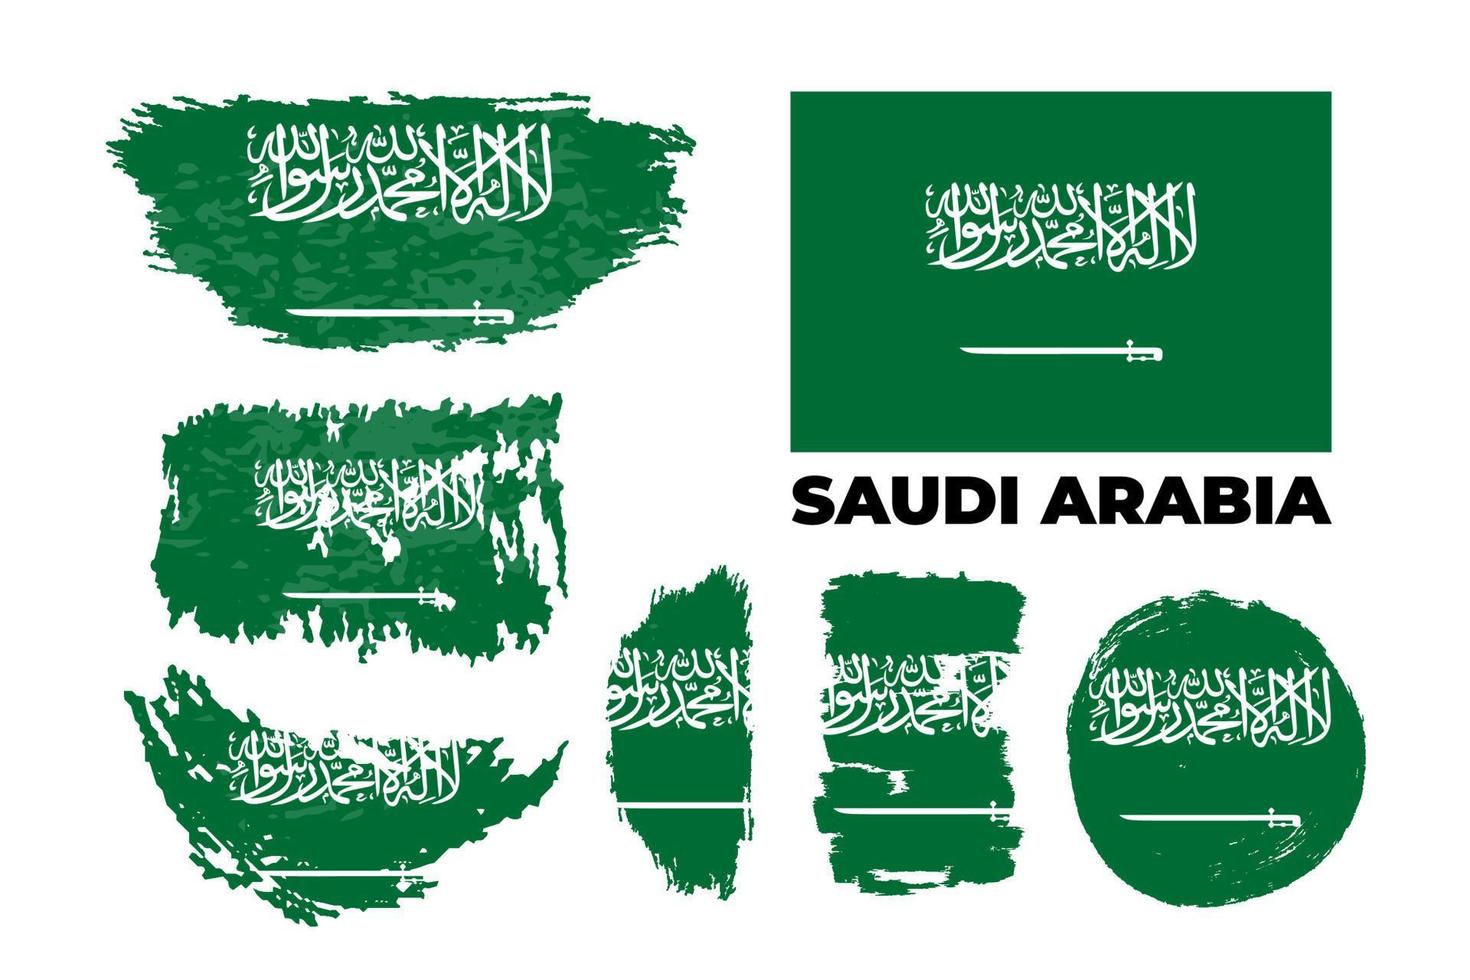 Grunge style brush painted Saudi Arabia country flag vector